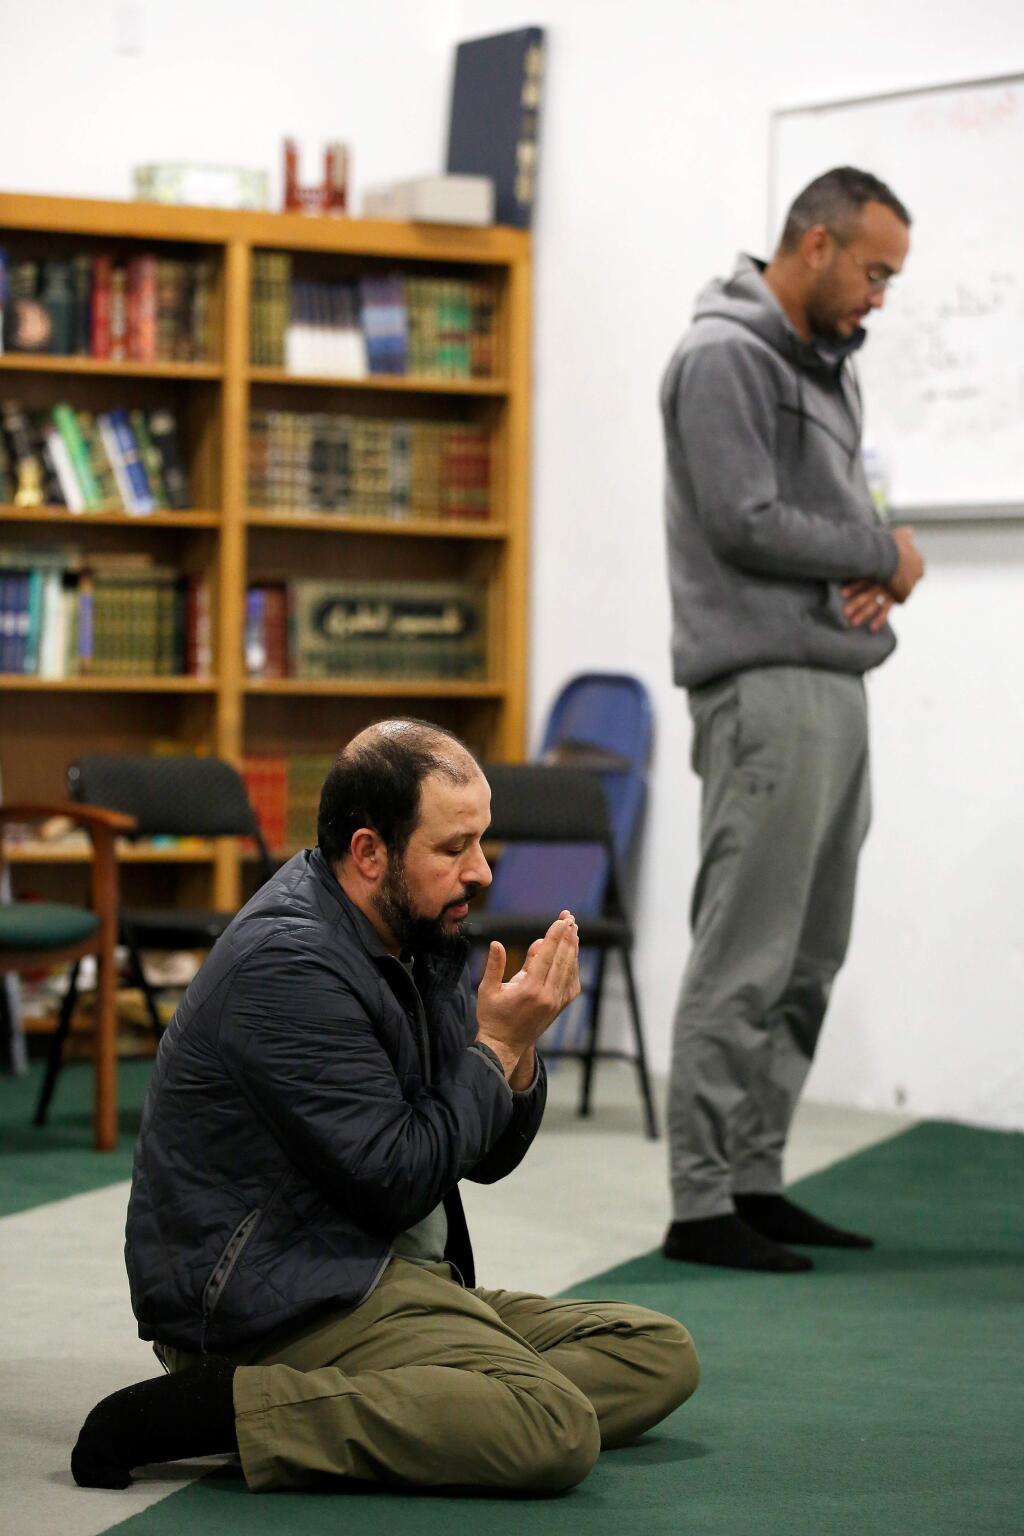 Houssine Latrache, left, and Abdul Amri offer voluntary prayers after Isha, a nightly Muslim prayer service, at the Islamic Society of Santa Rosa in Santa Rosa, California, on Saturday, March 16, 2019. (Alvin Jornada / The Press Democrat)